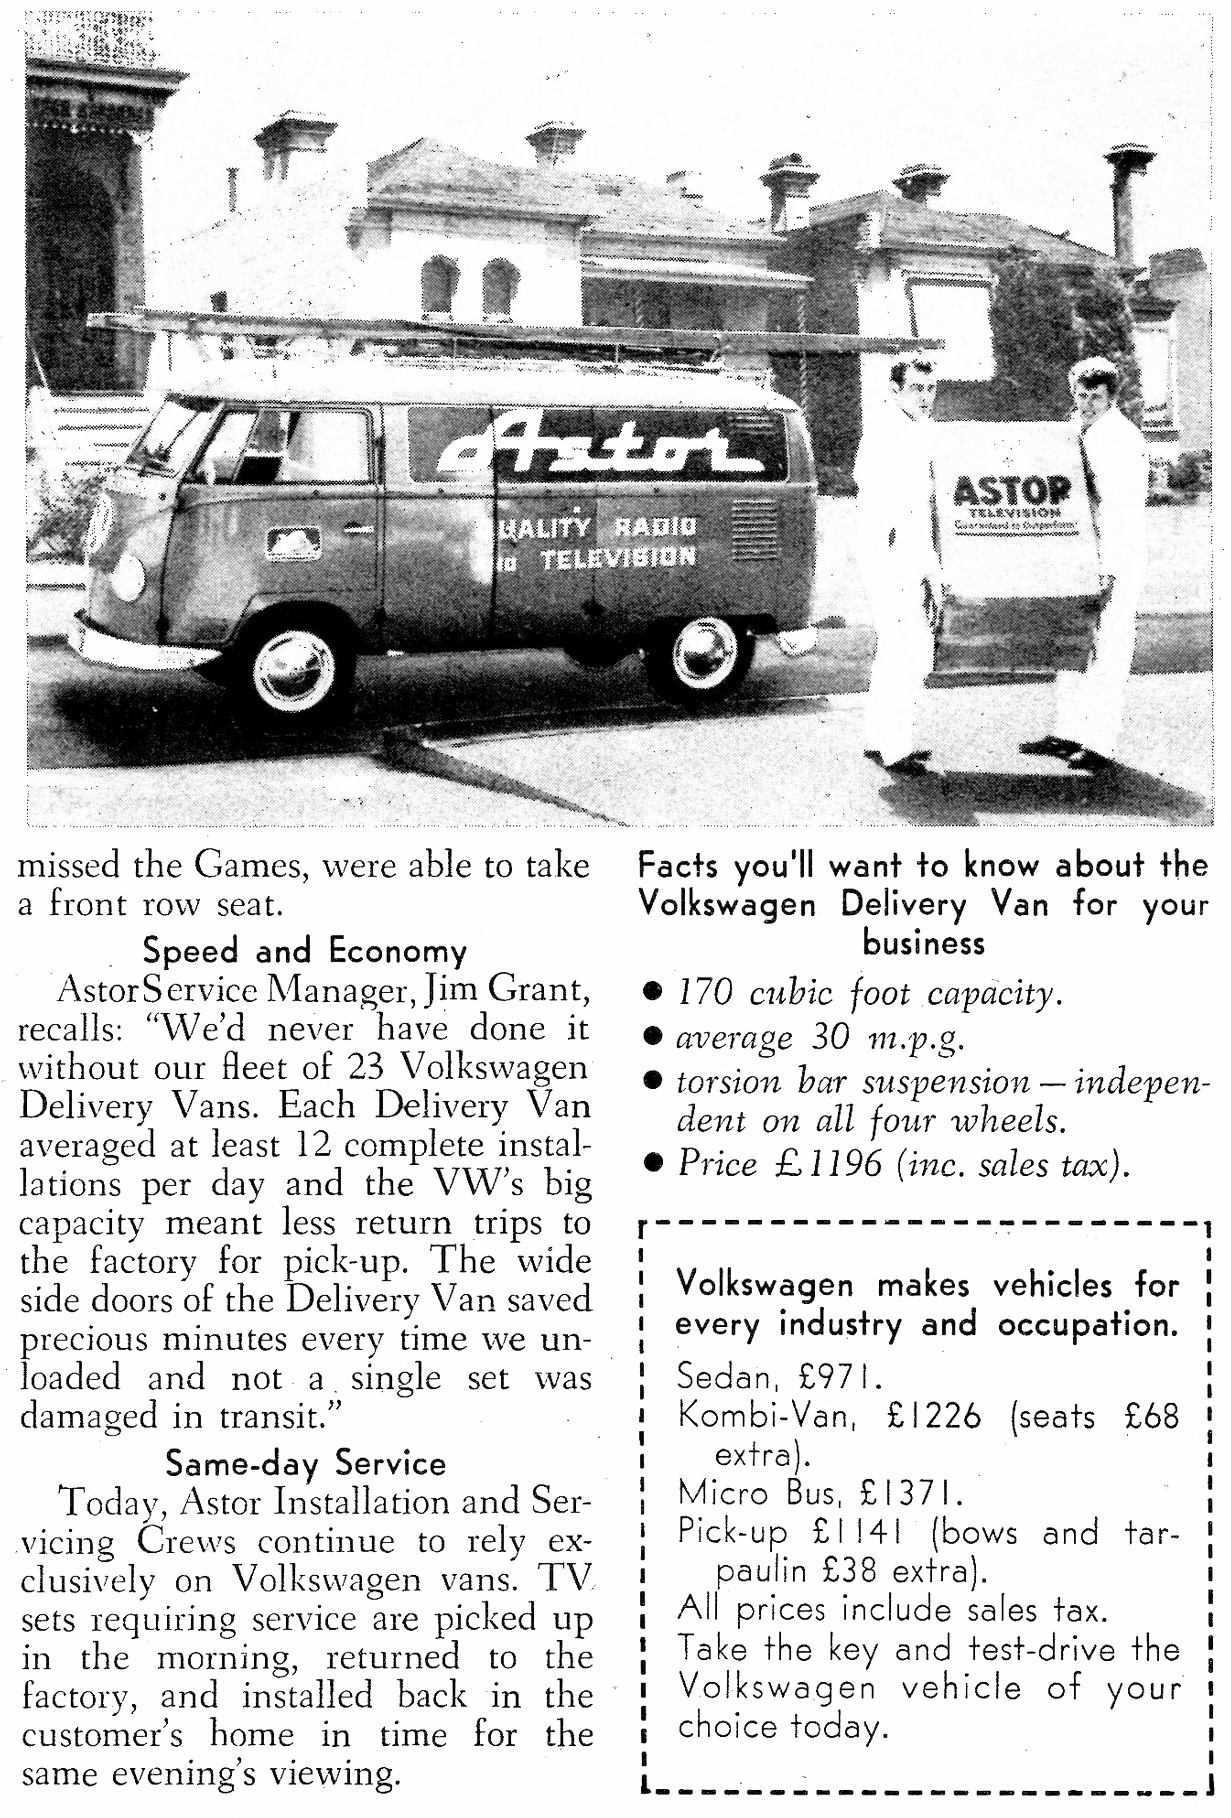 1958 Vokswagen Delivery Vans - 1956 Melbourne Olympic Games - Page 2